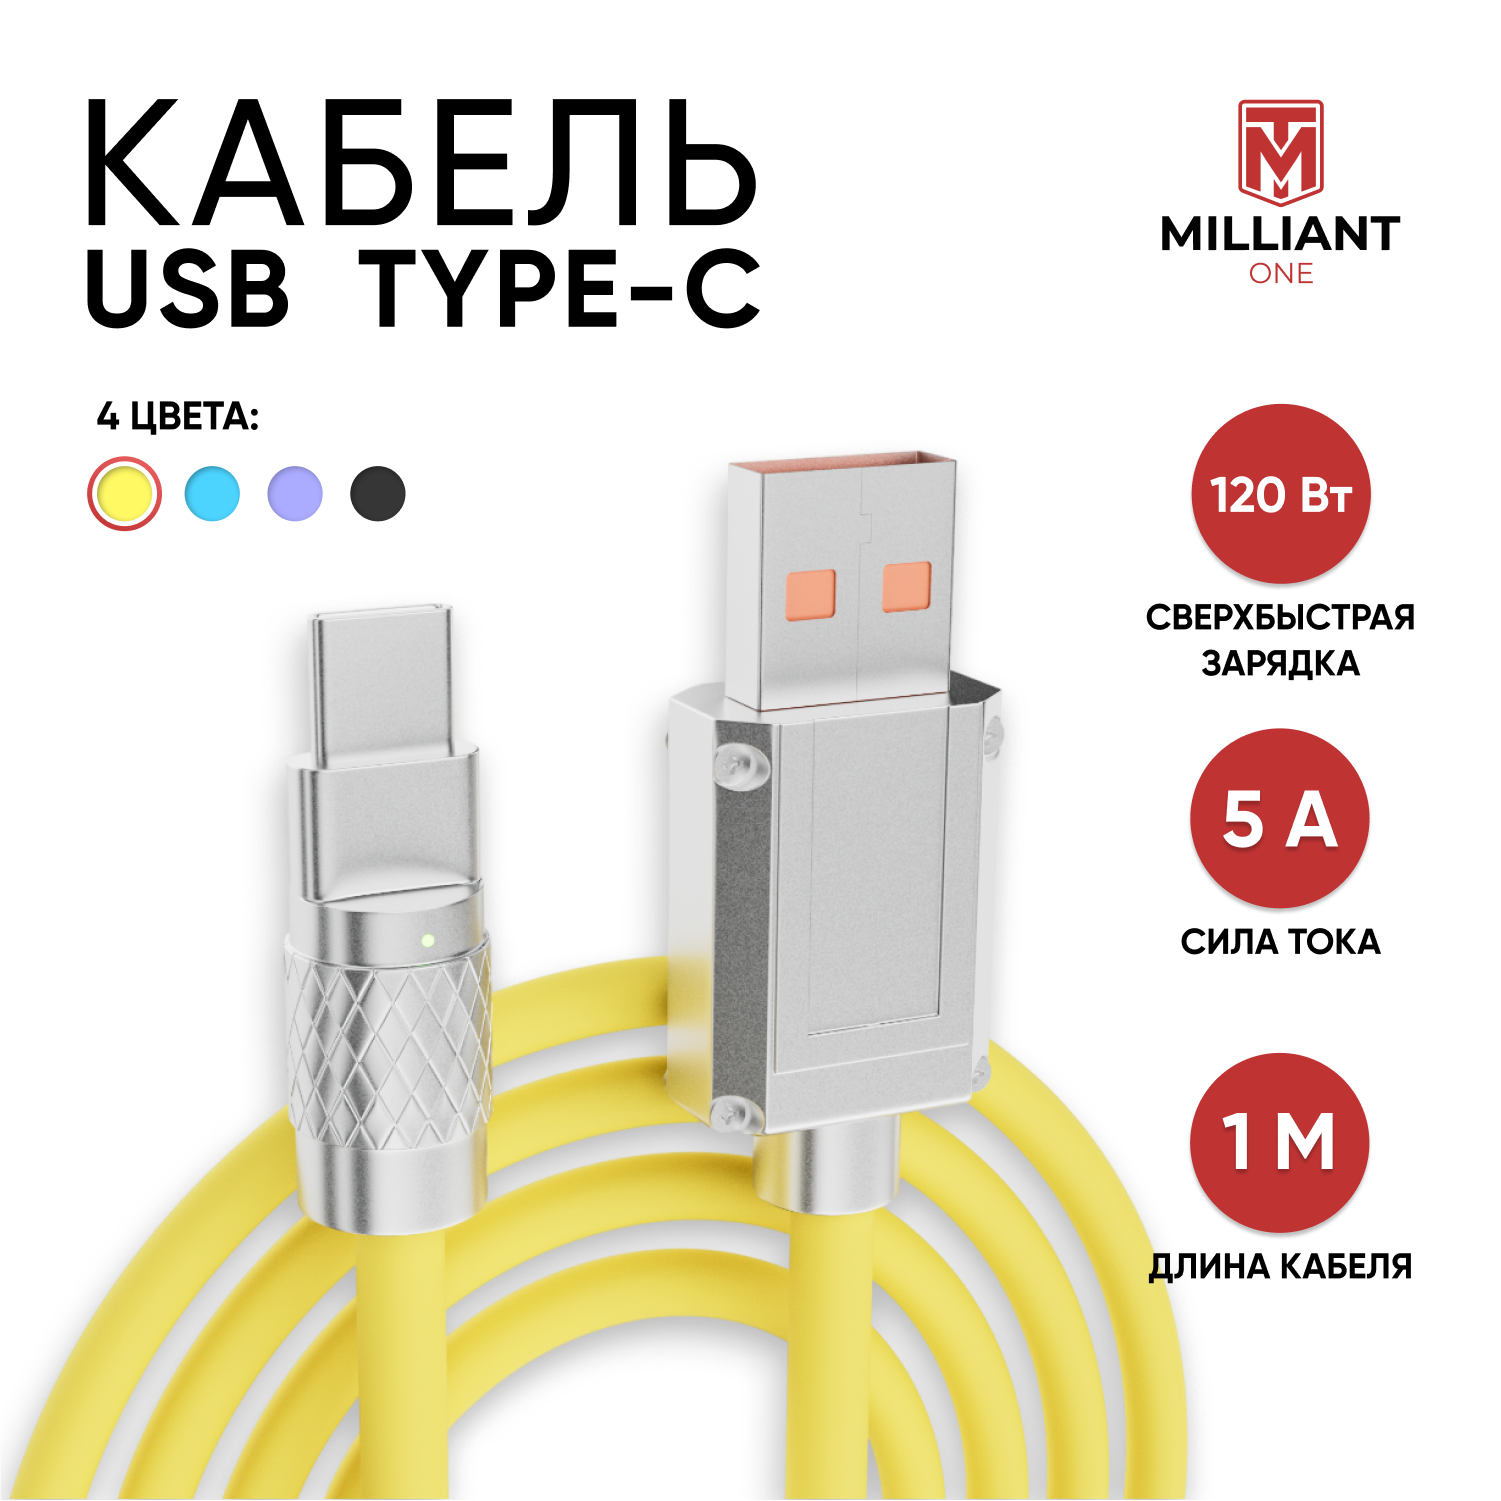 Кабель usb type c, Milliant One, тайп си кабель, шнур для зарядки телефона, type c usb кабель, шнур usb type c ( желтый )